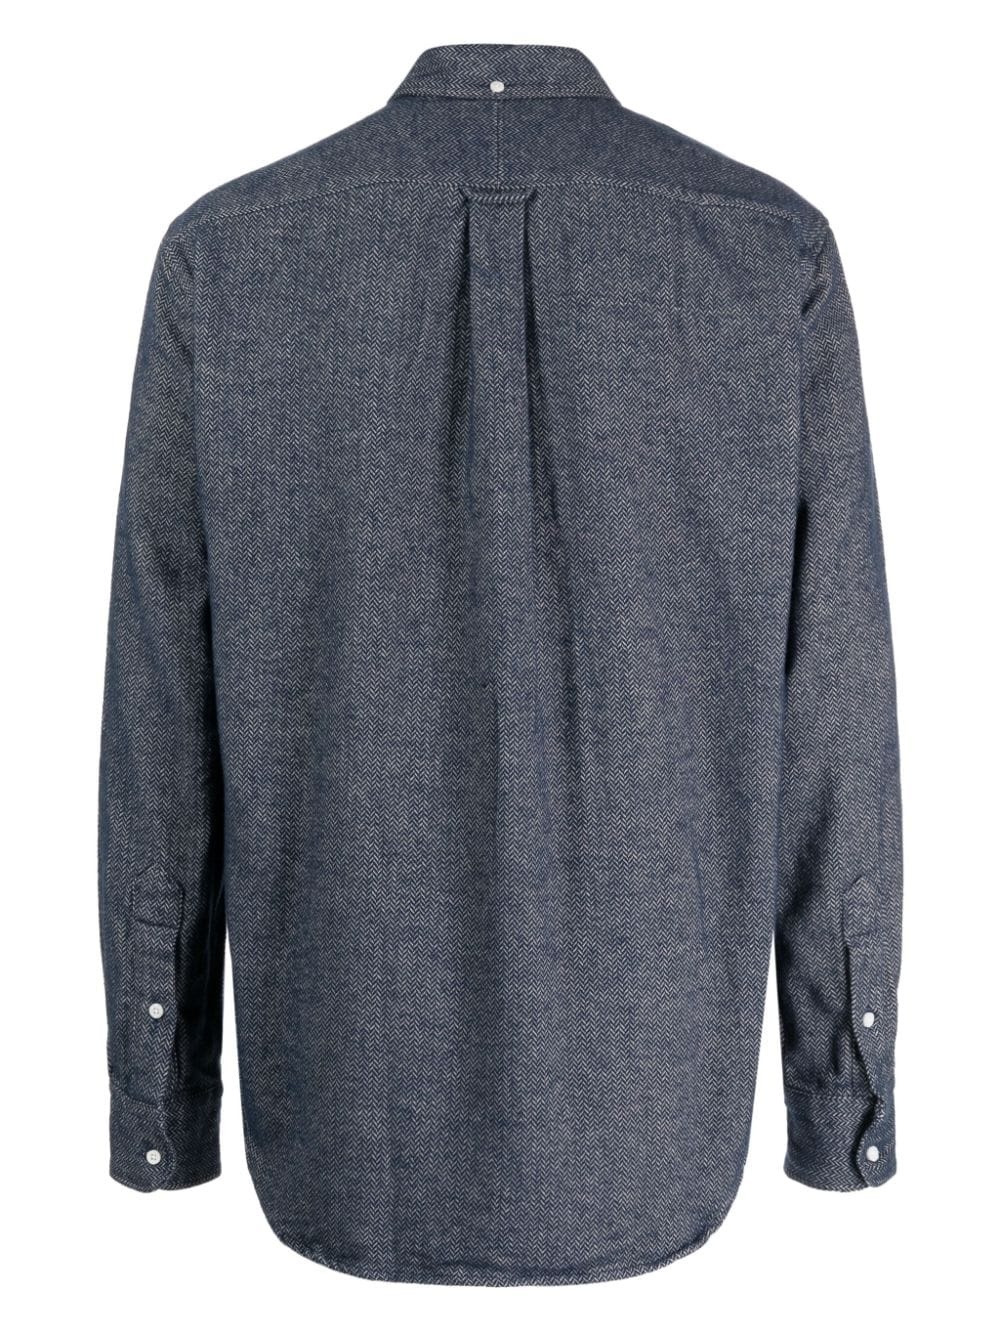 herringbone-pattern flannel shirt - 2